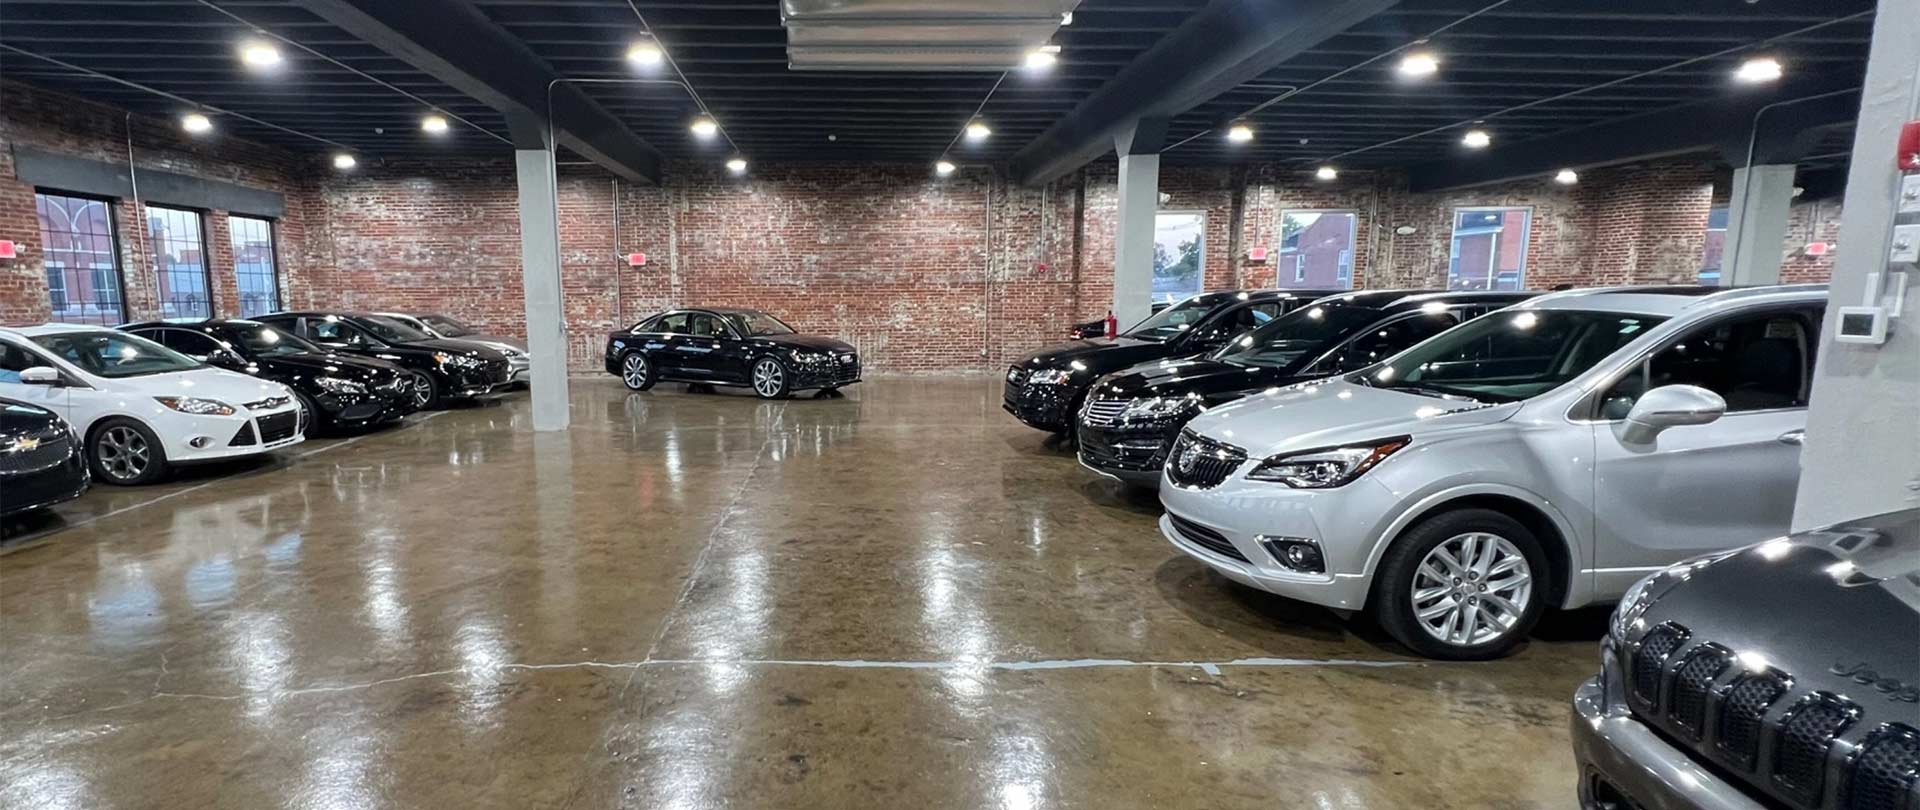 Edge autosports bg showroom